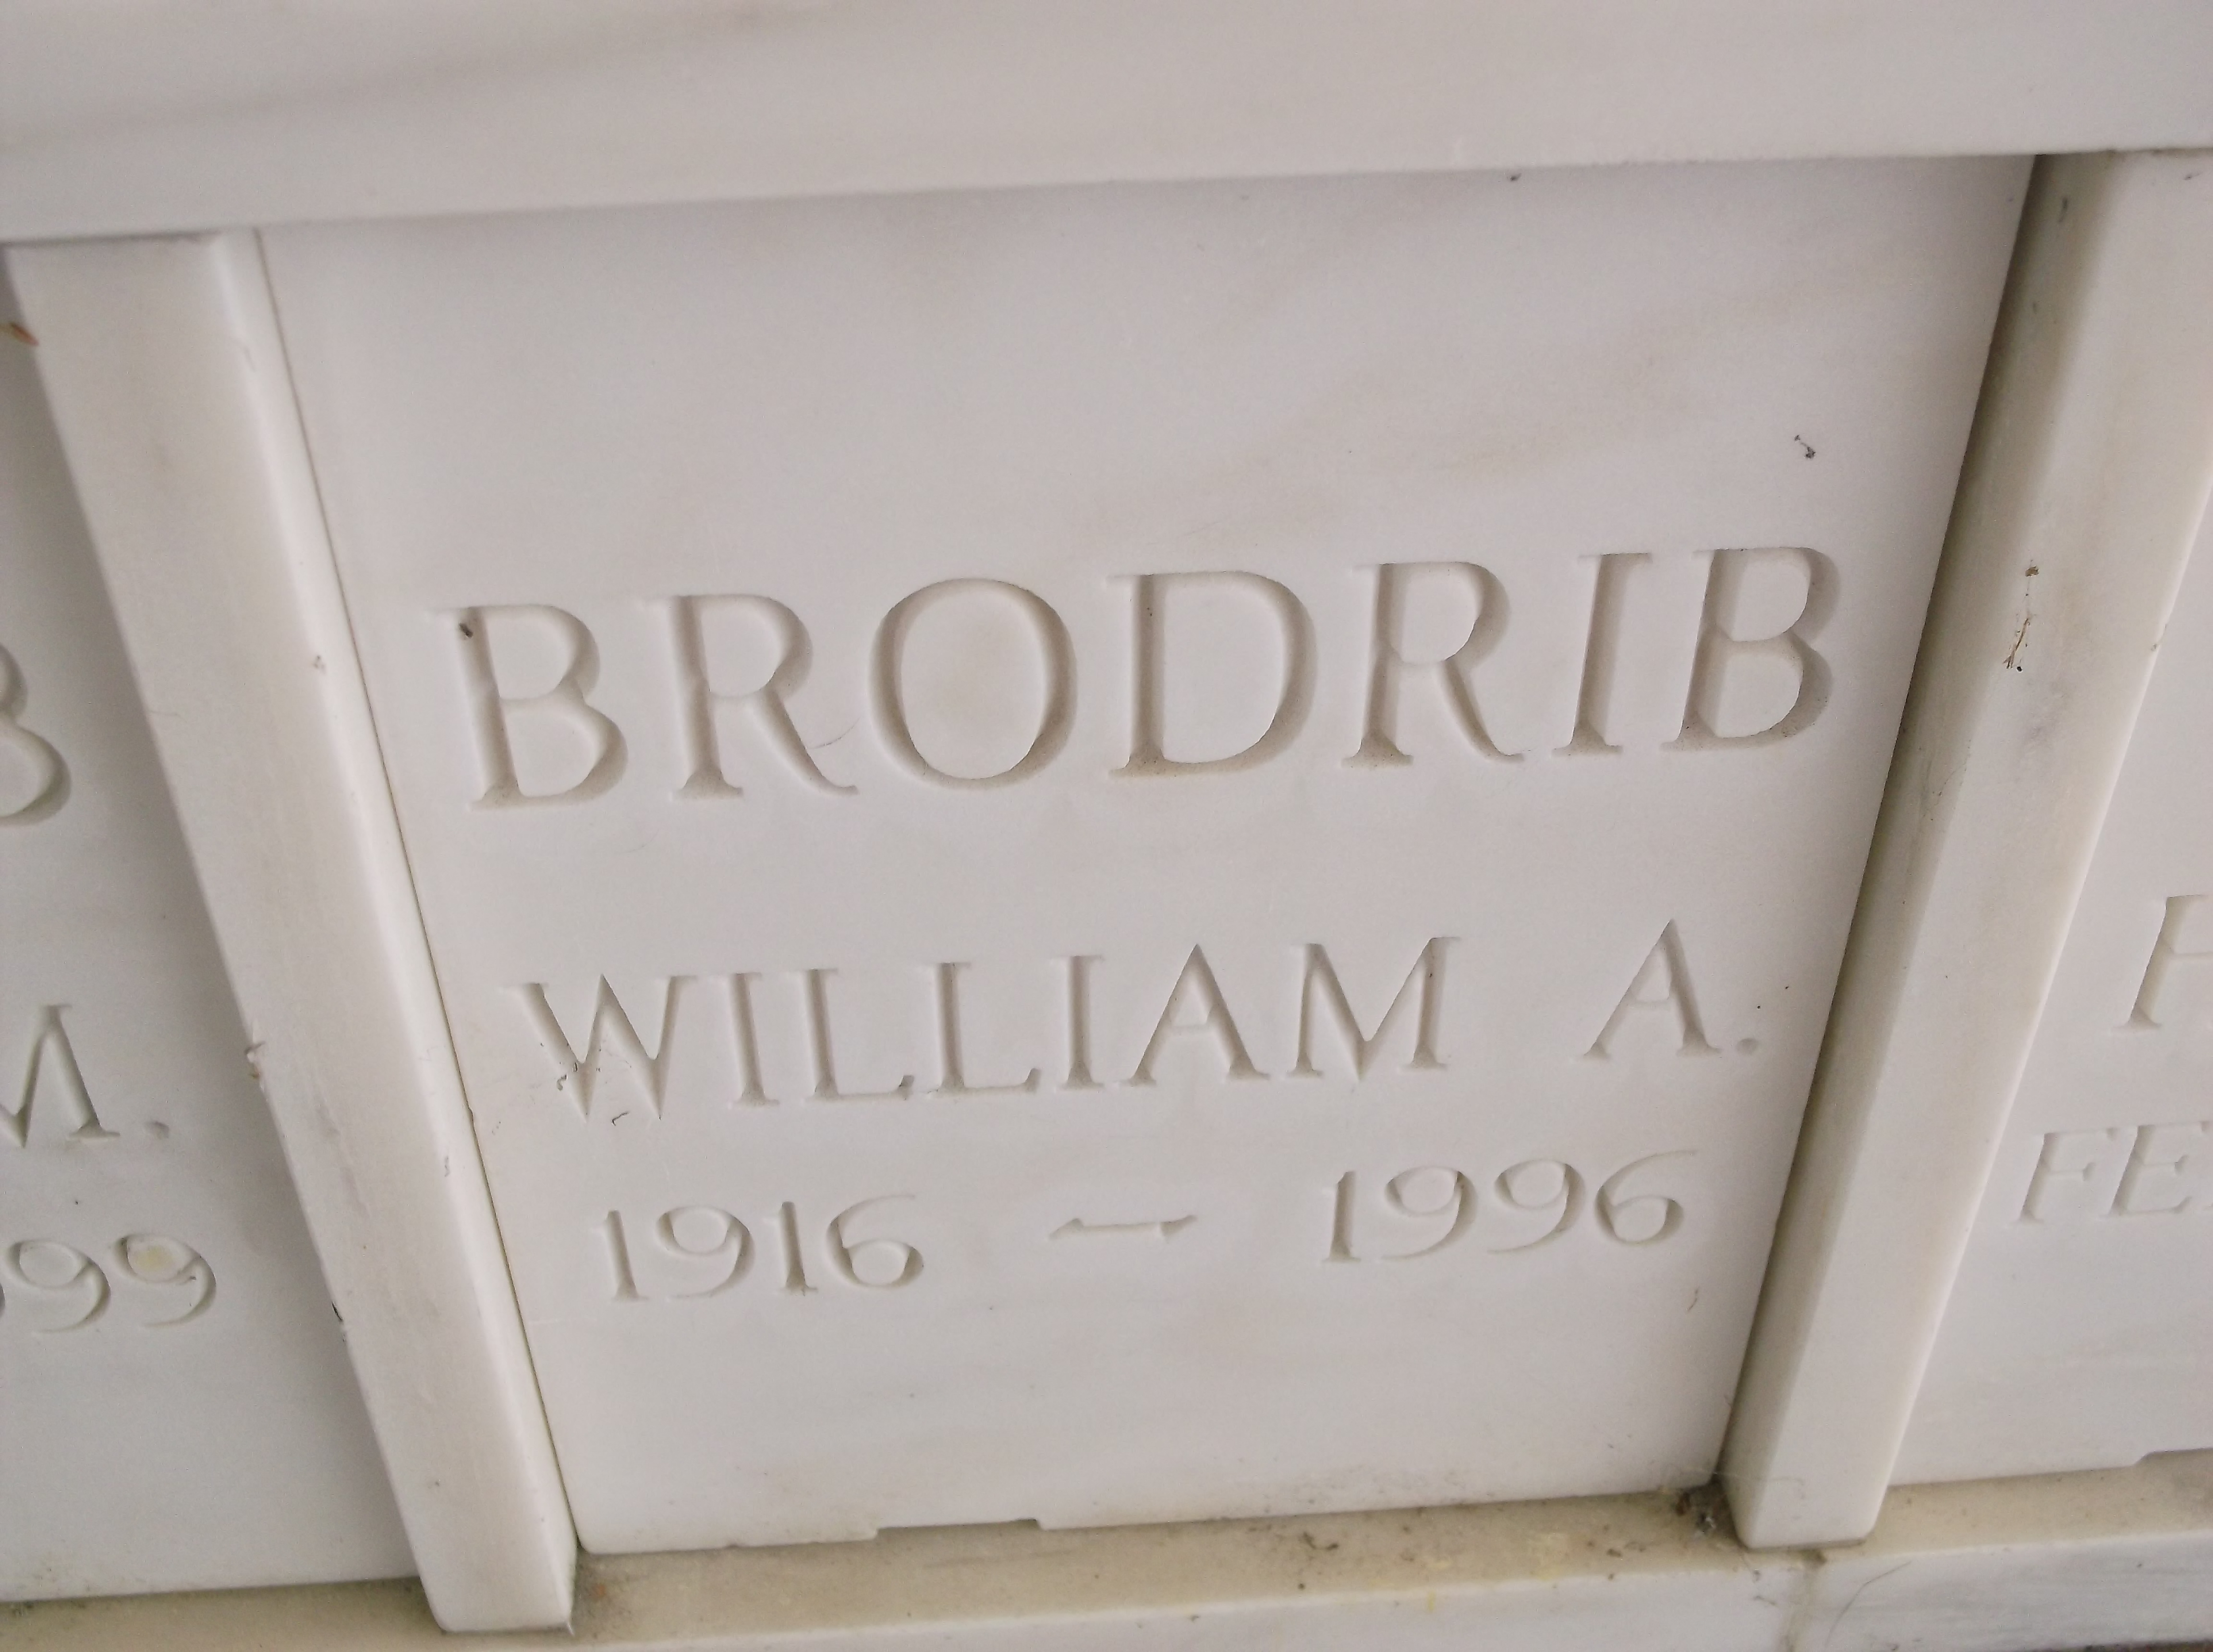 William A Brodrib